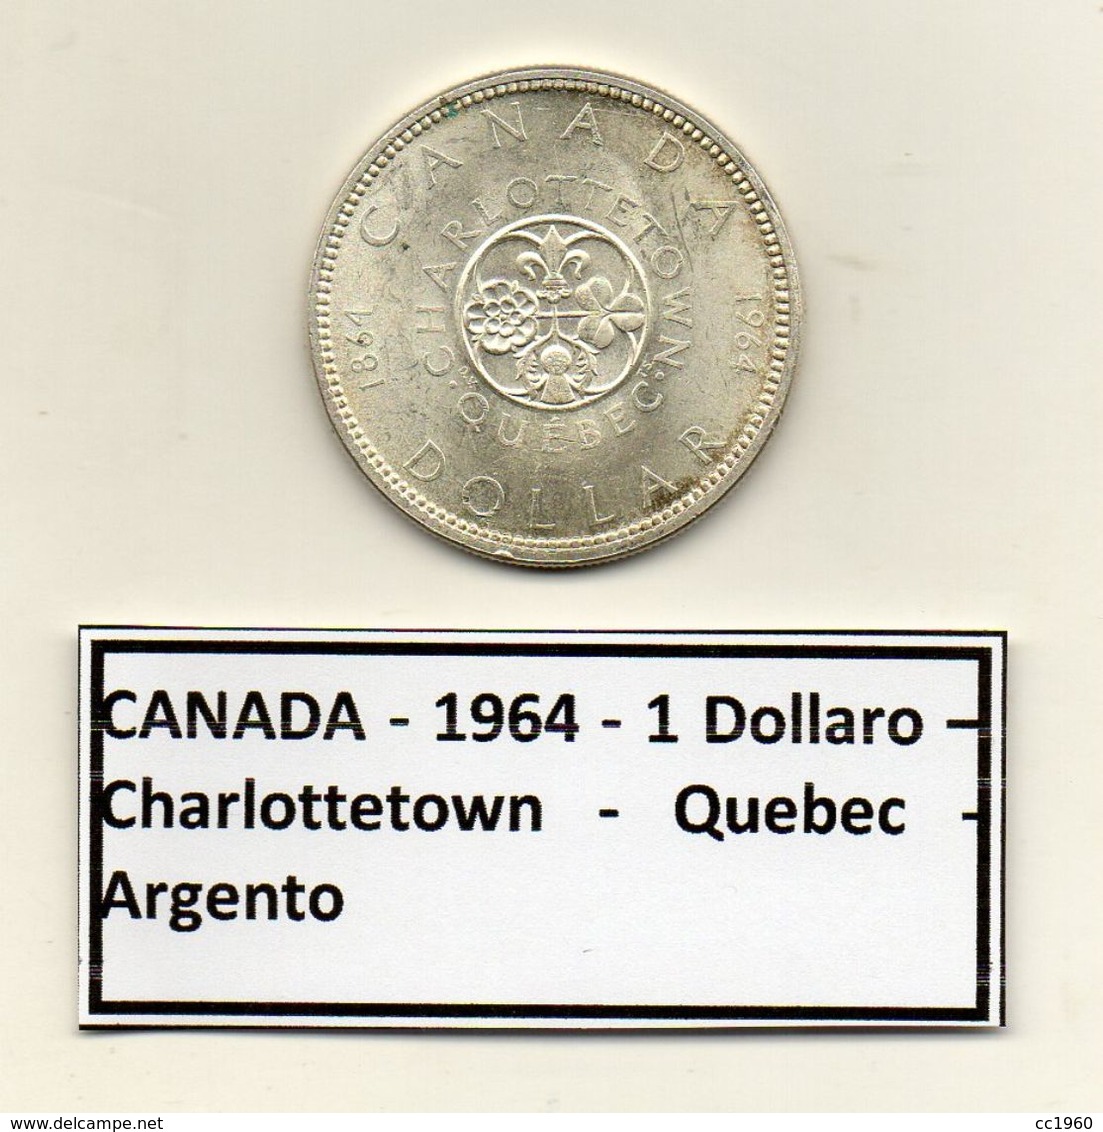 Canada - 1964 - 1 Dollaro - Charlottetown - Quebec - Argento - (MW1176) - Canada